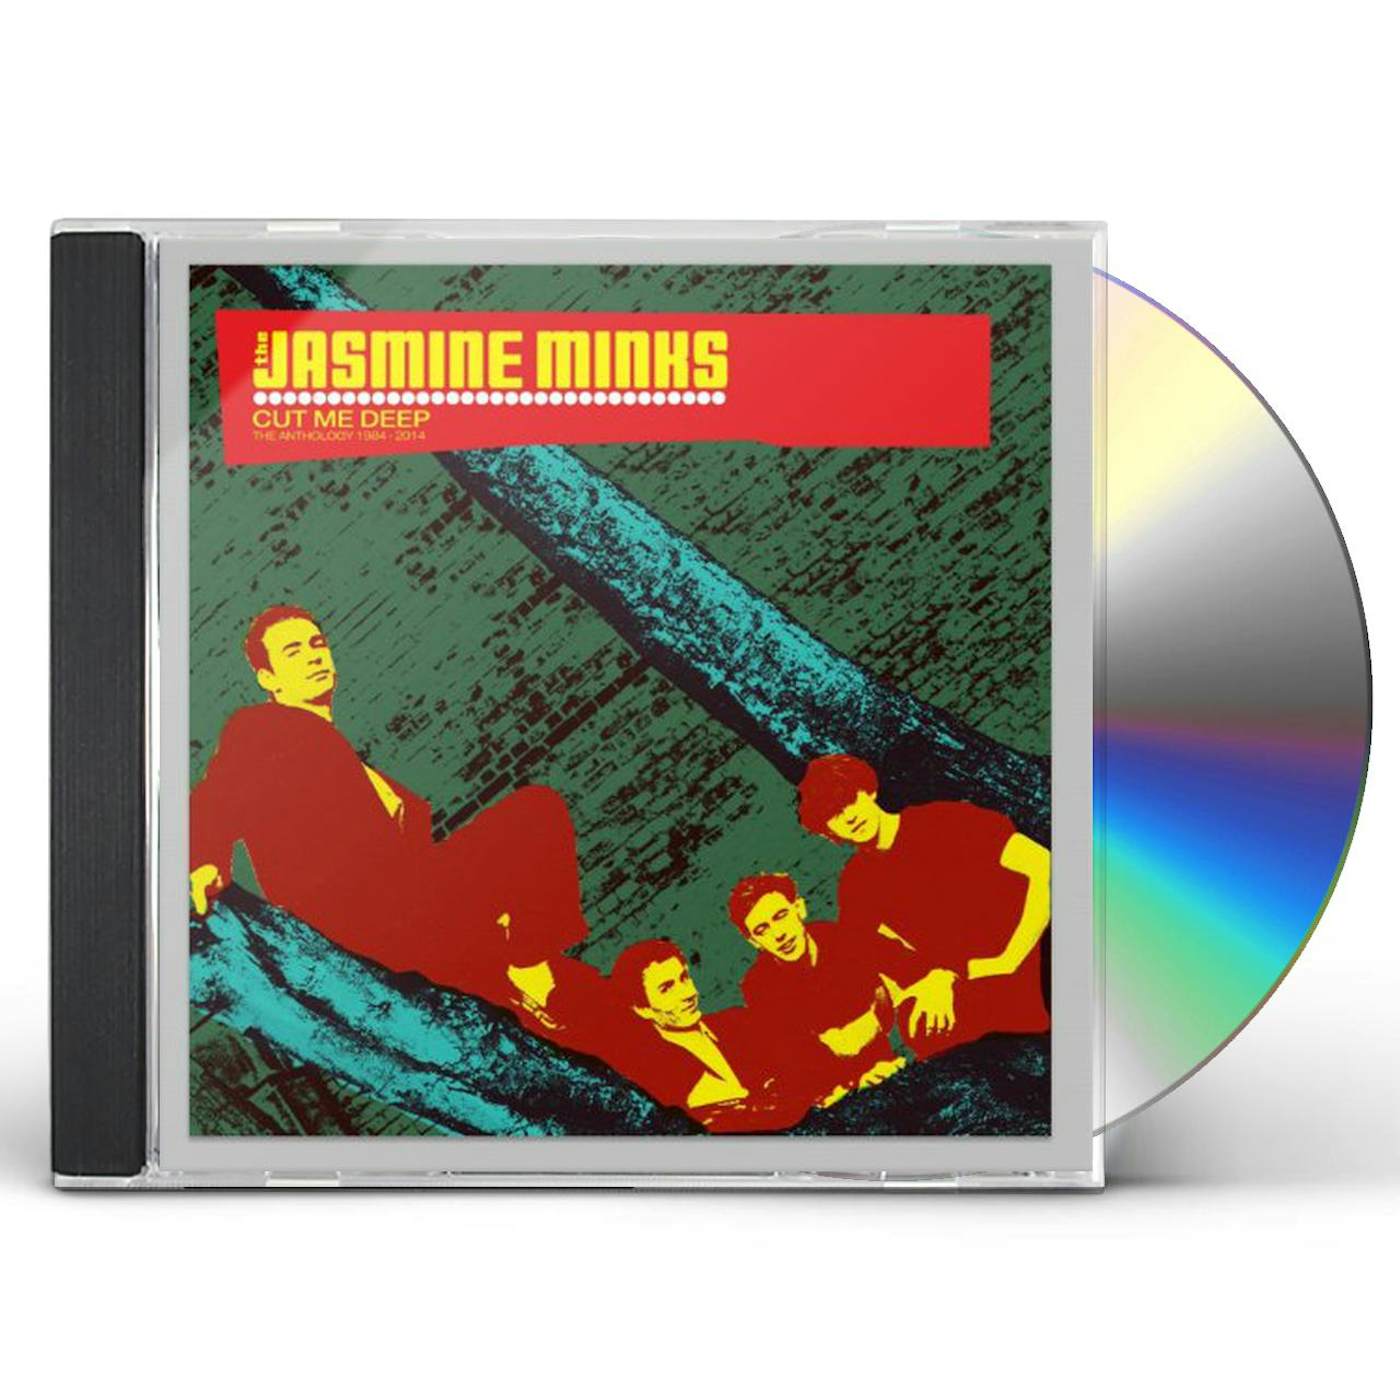 The Jasmine Minks CUT ME DEEP-THE ANTHOLOGY 1984-2014 CD